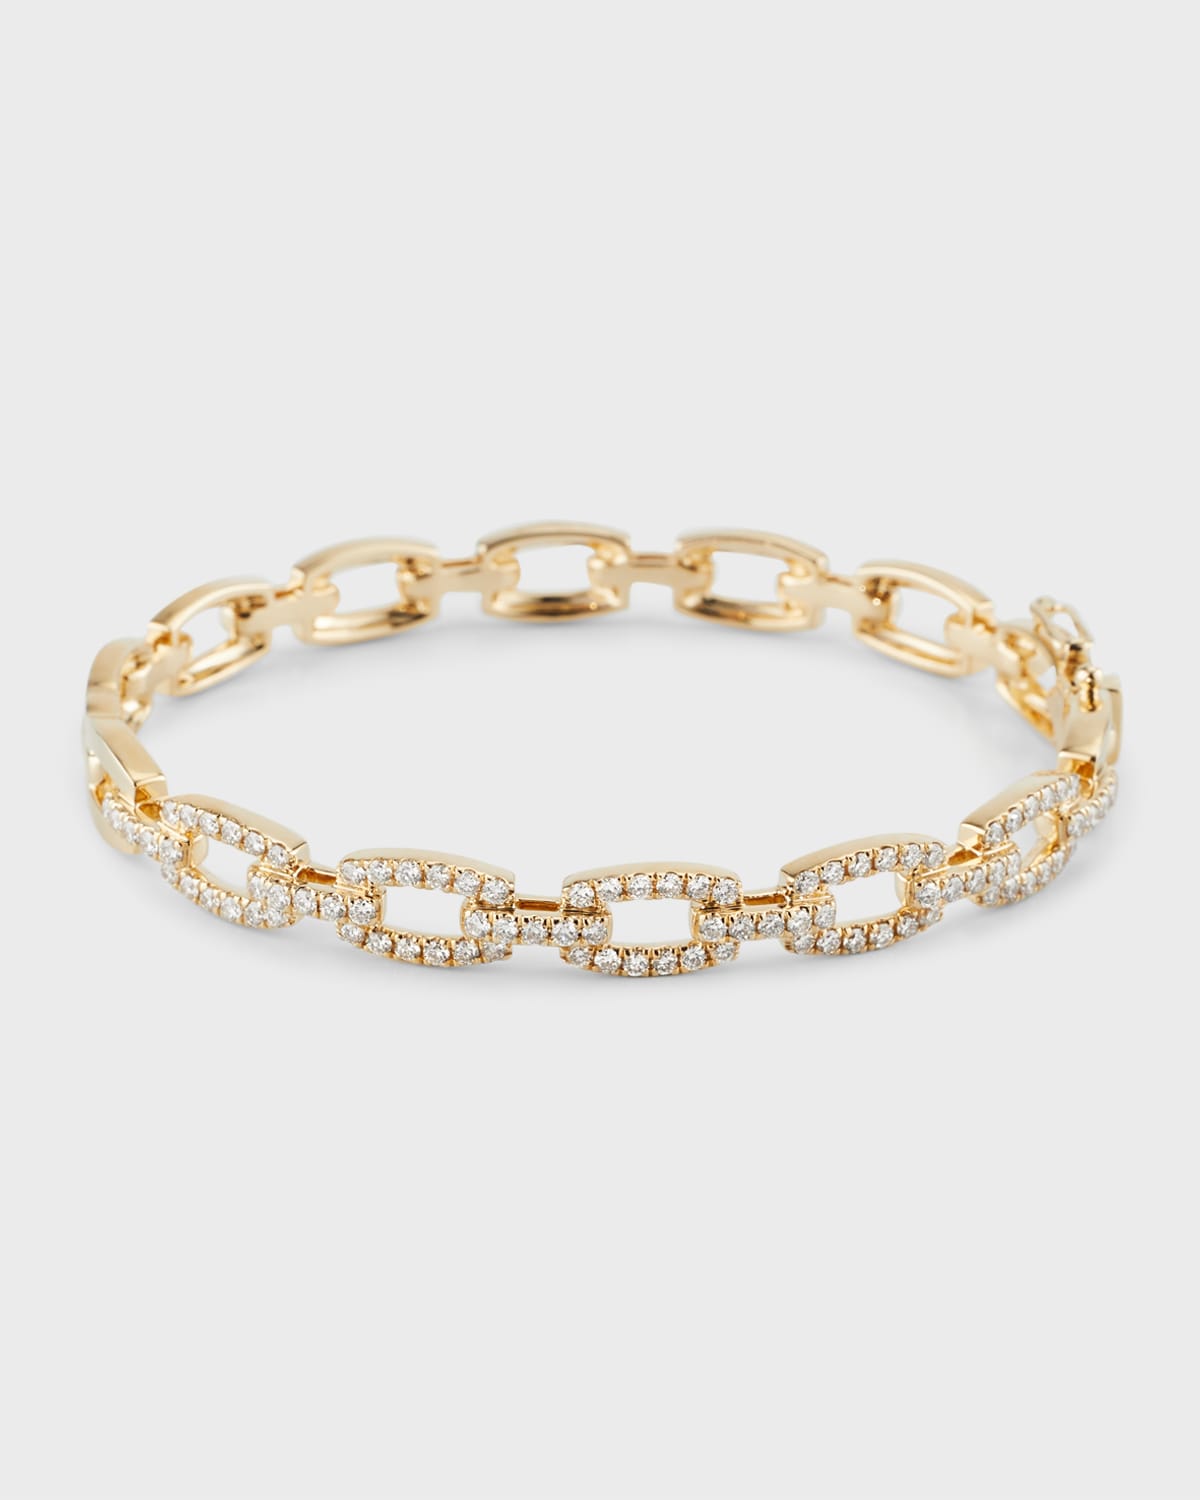 14K Yellow Gold Diamond Link Bangle Bracelet, 16cm